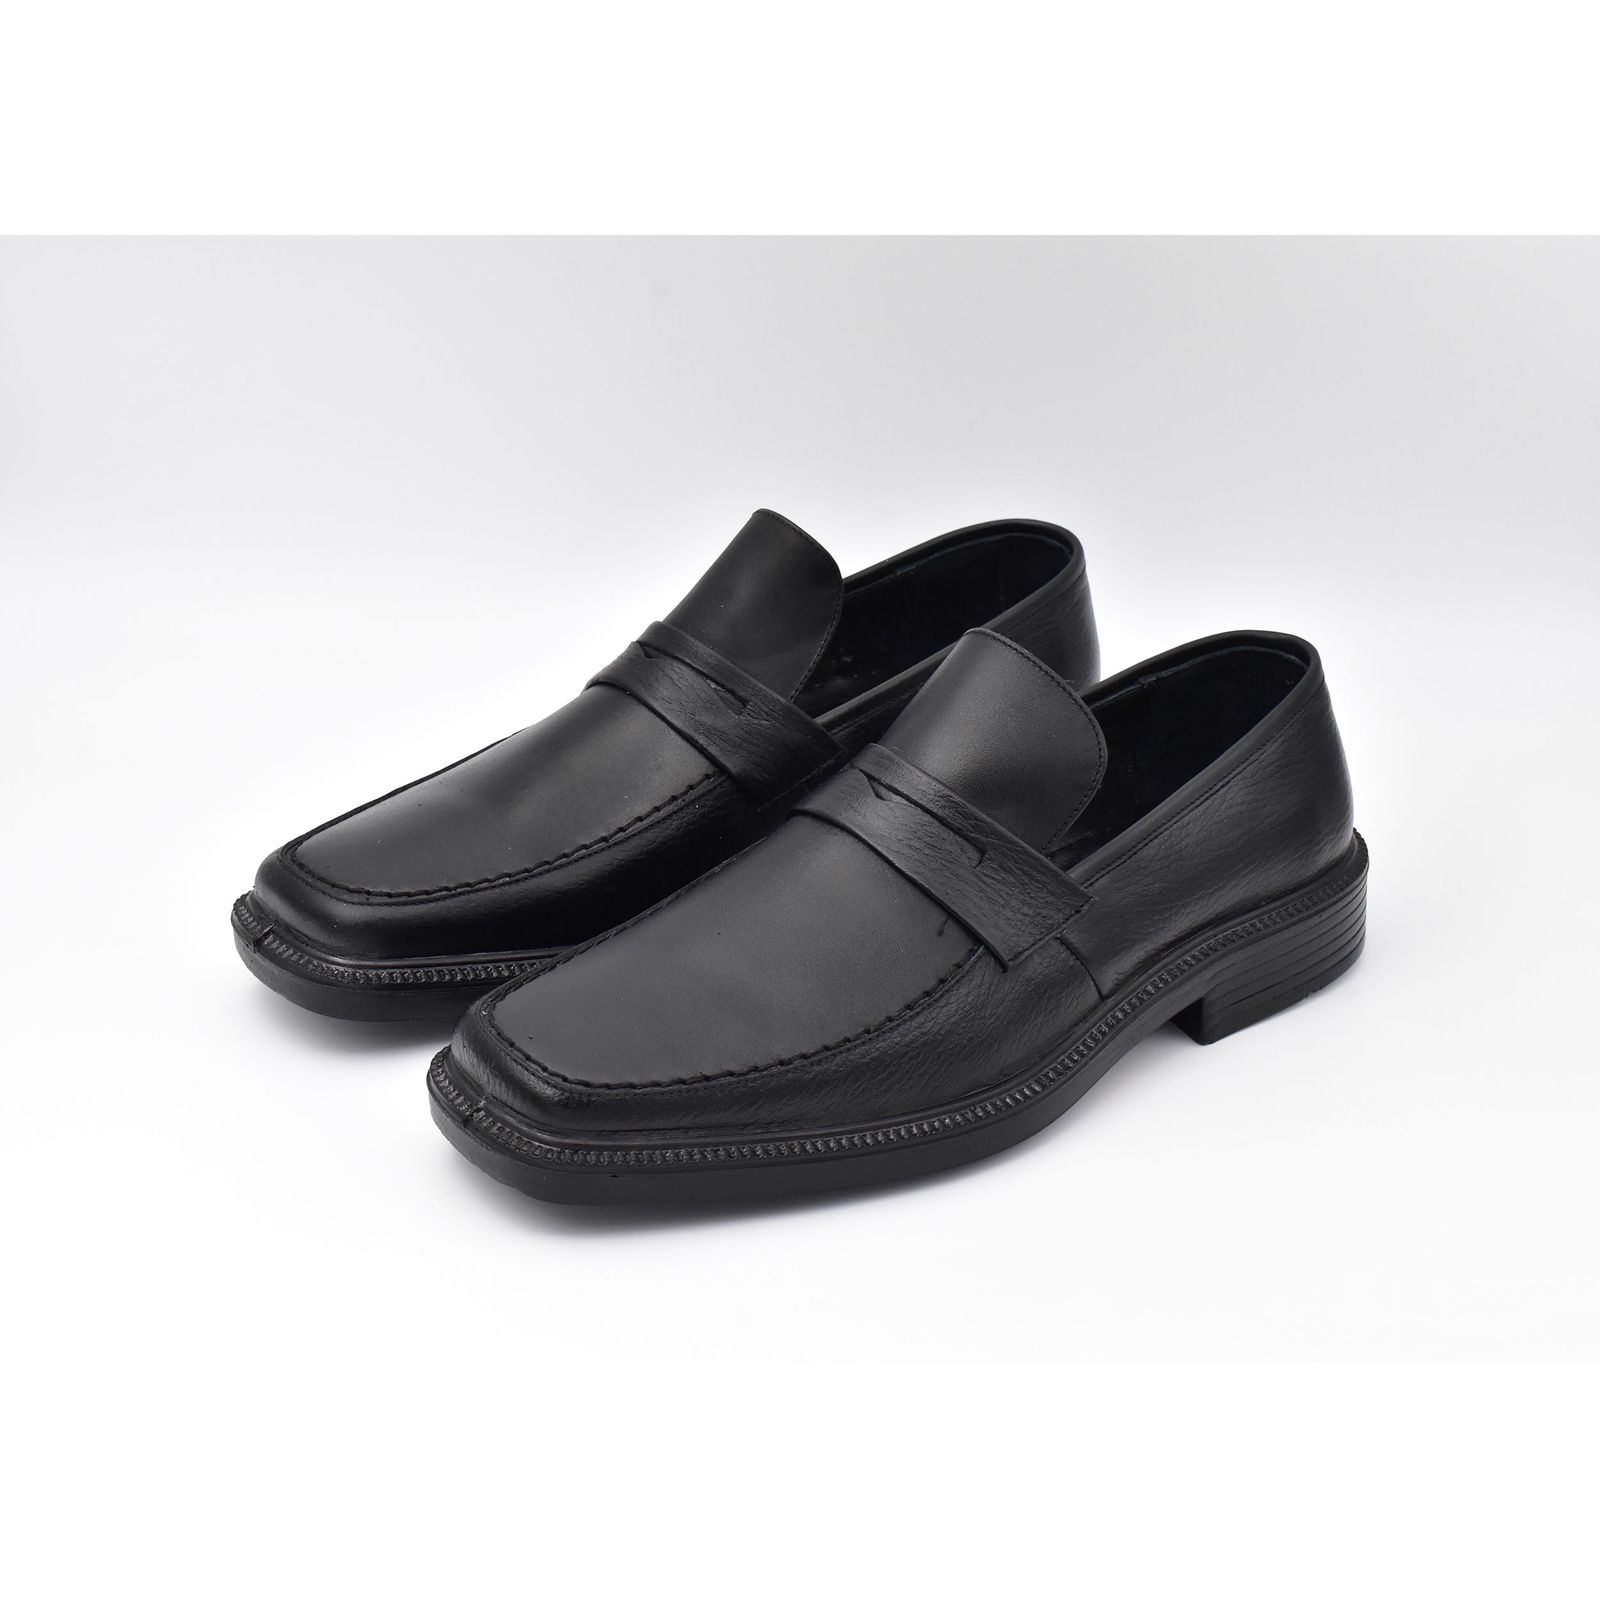 کفش مردانه پاما مدل Oscar کد G1189 -  - 4